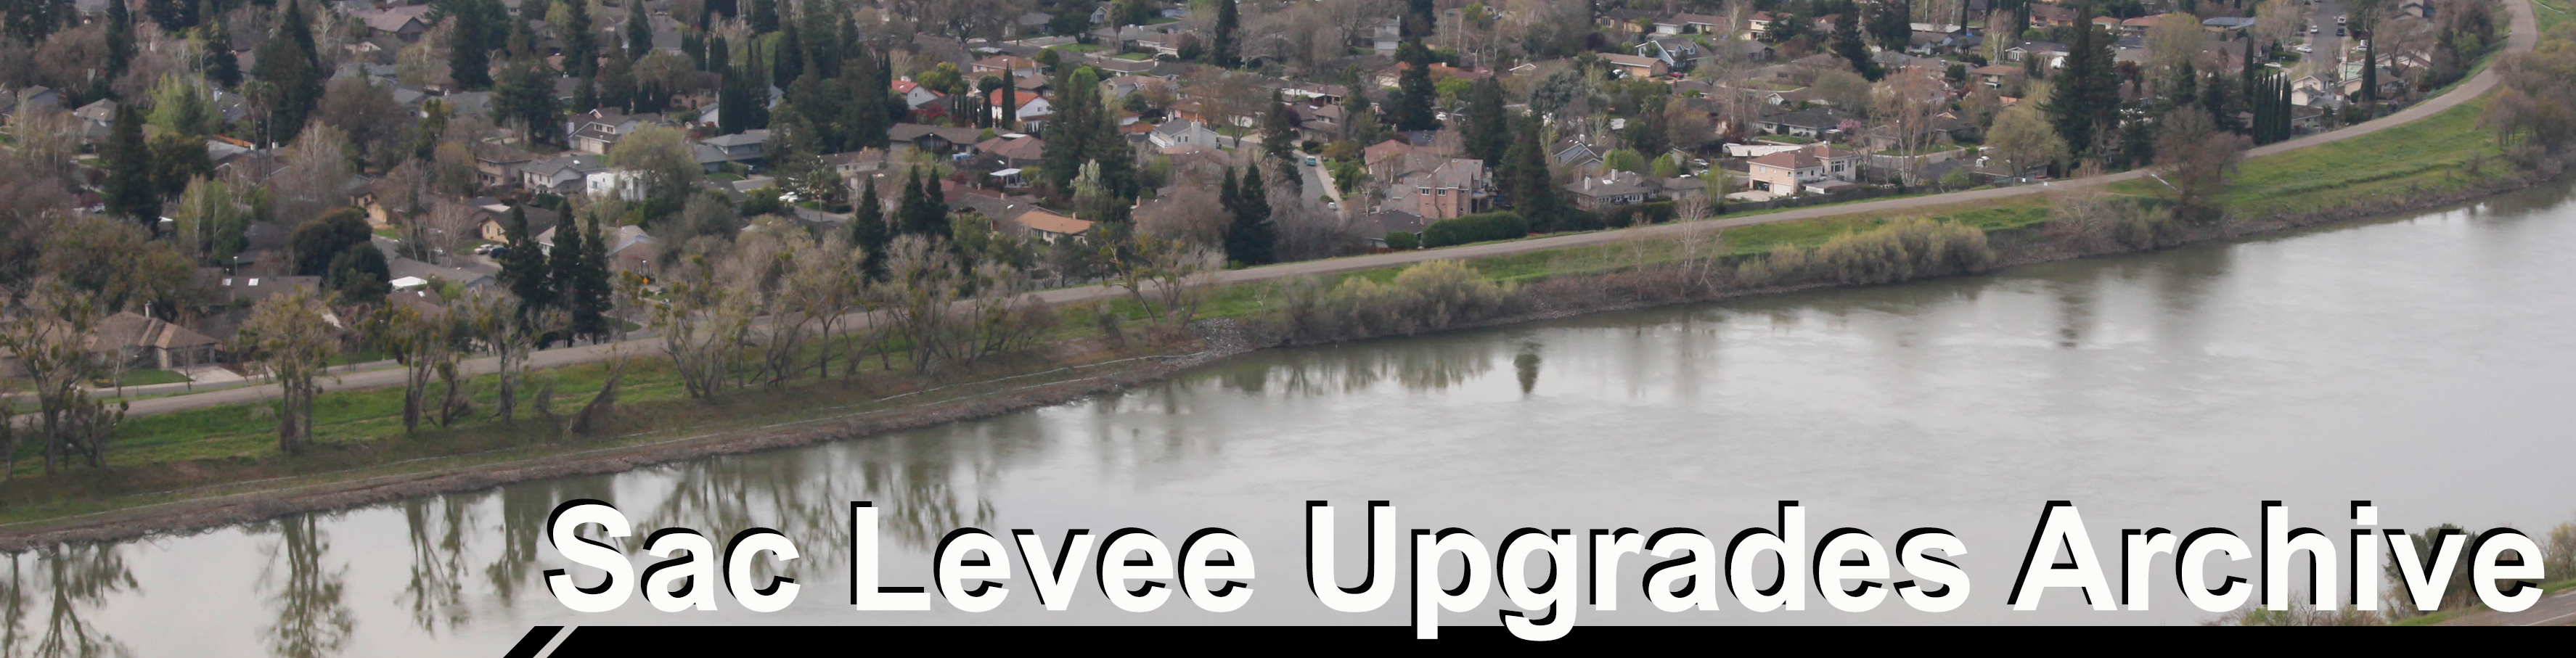 Banner - Sacramento Levee Upgrades Archive